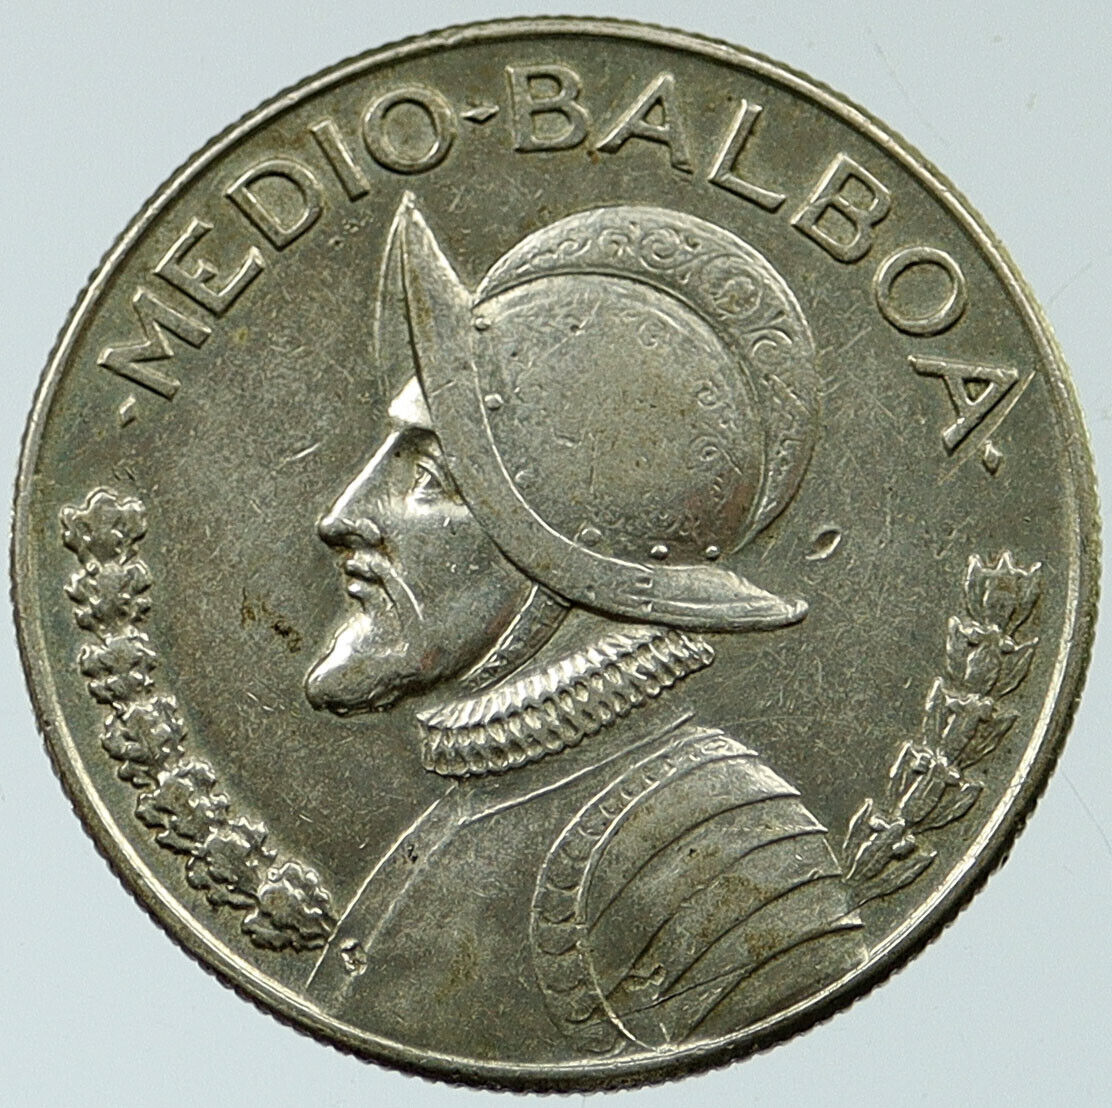 1966 PANAMA Spanish Conquistador Hero Genuine OLD Silver 1/2 BALBOA Coin i117675